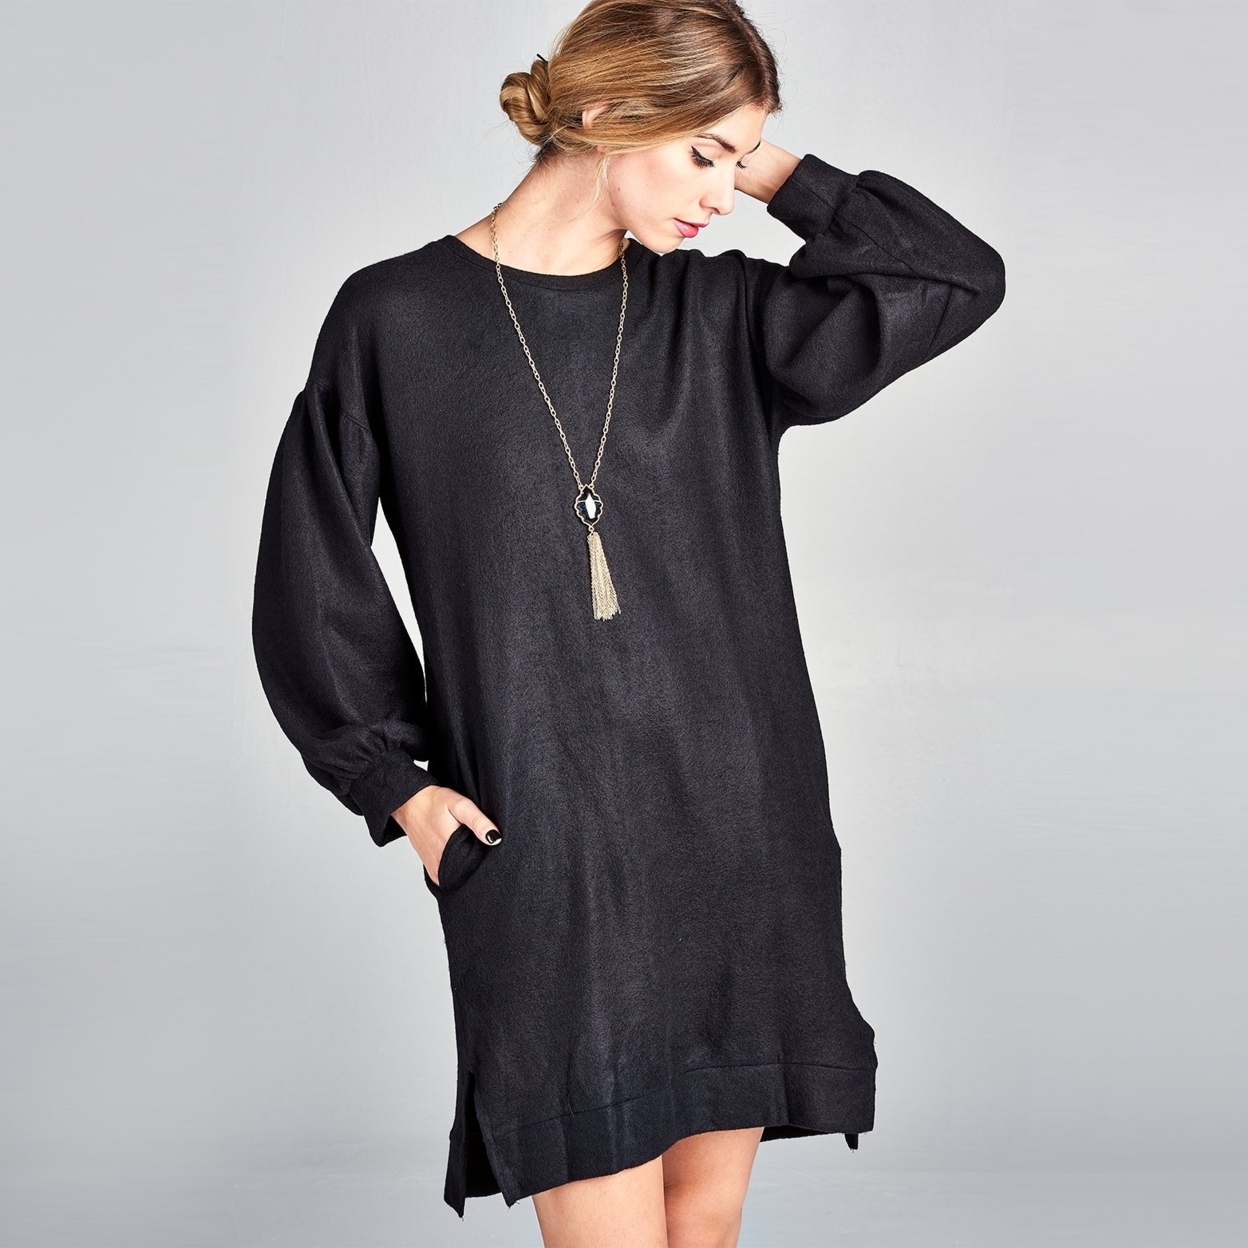 Puff Sleeve Sweater Dress - Black, Medium (8-10)